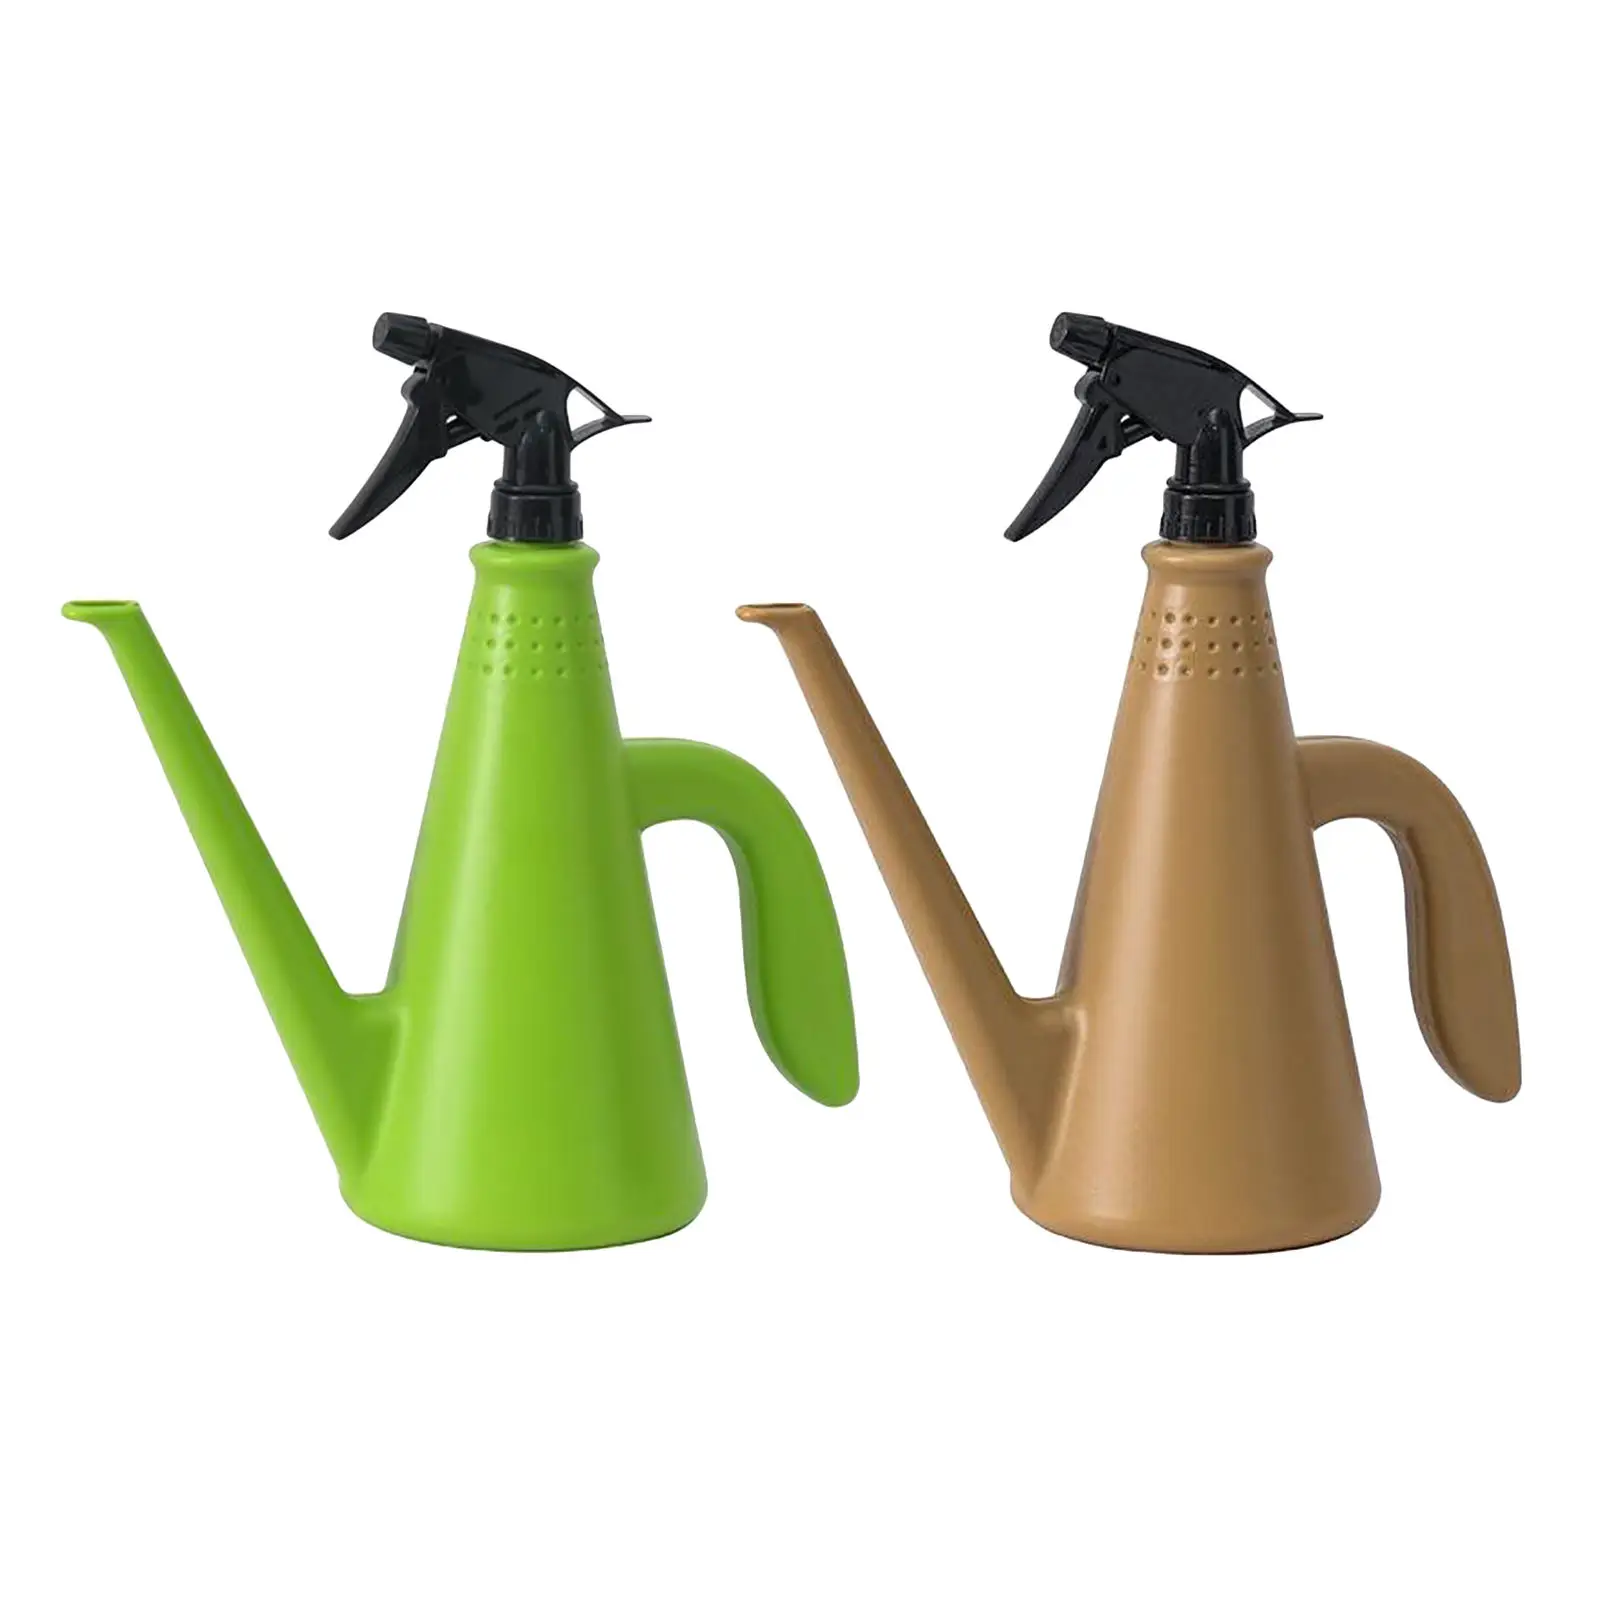 New Multifunctional Spray Bottle Gardening Sprayer Small Pressure Watering Can Home Supplies Garden Tool